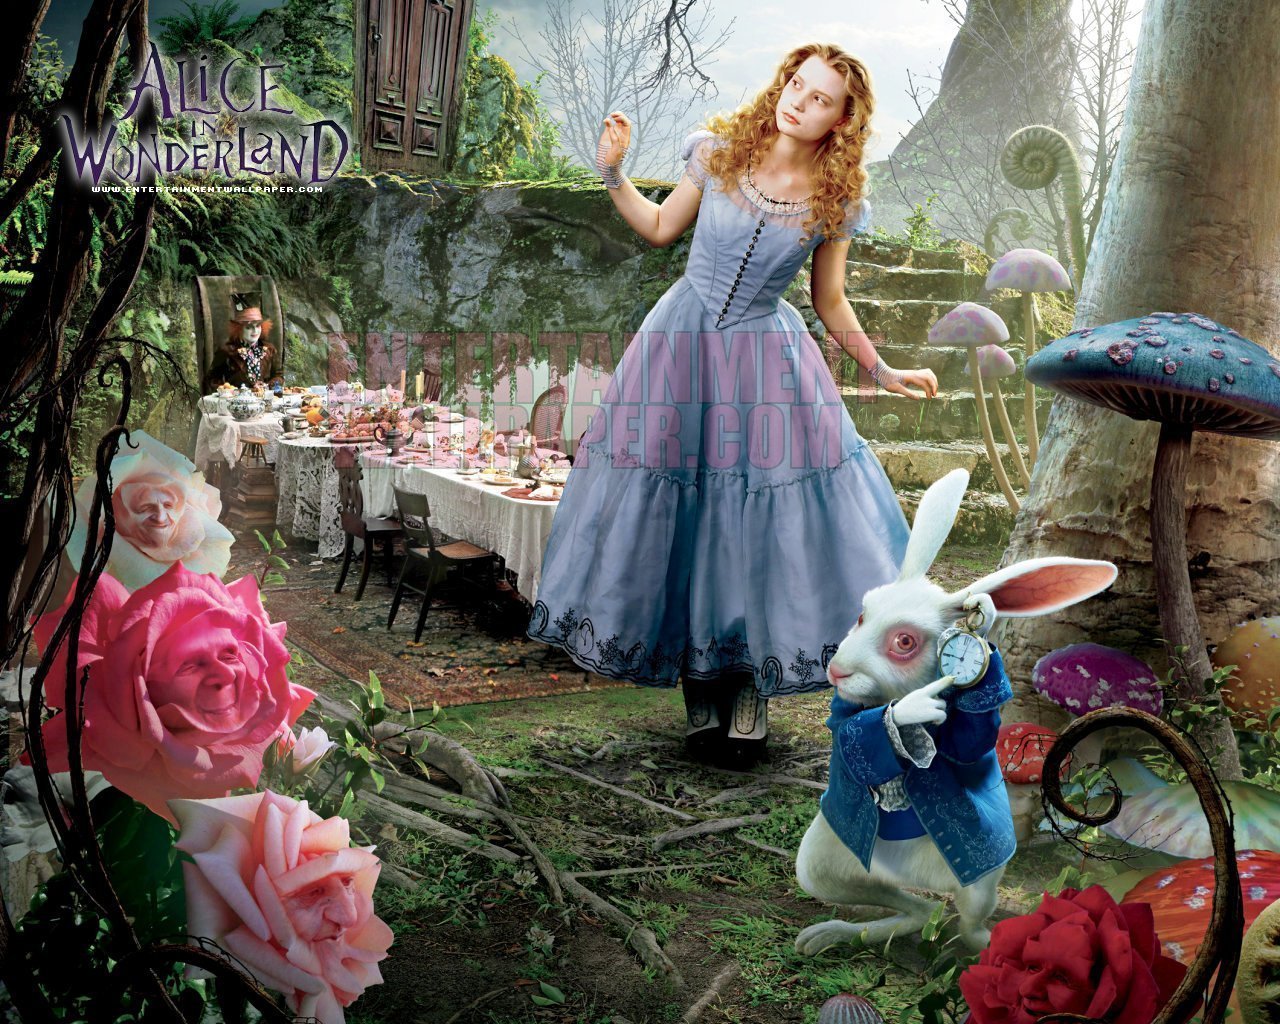 Alice In Wonderland Image Wallpaper Photos